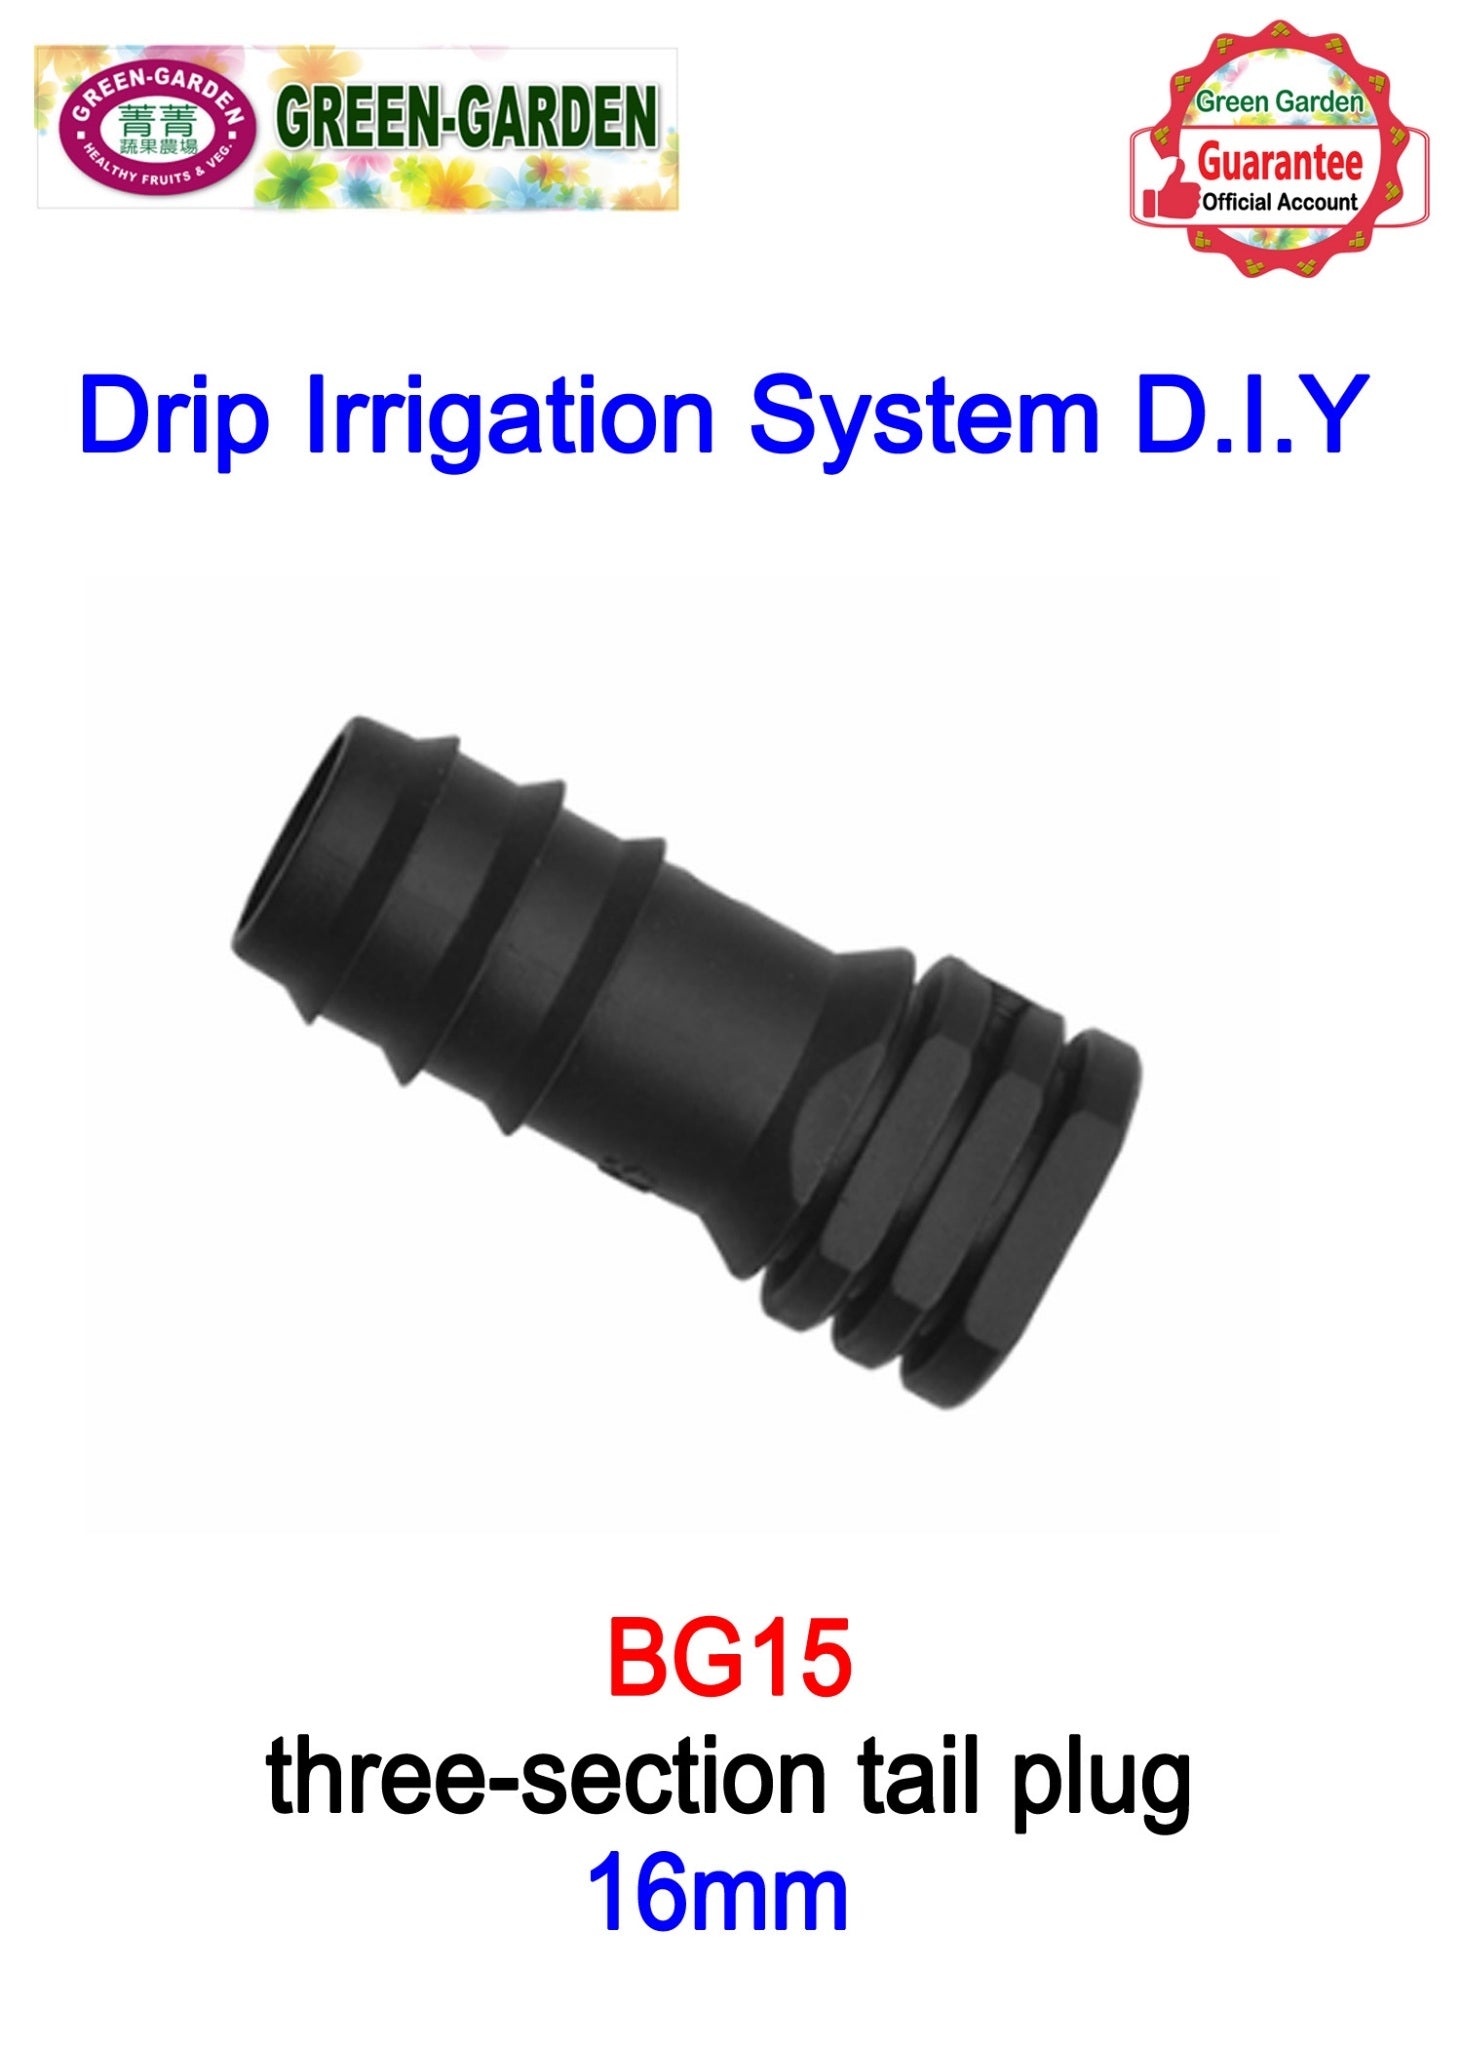 Drip Irrigation System - 16mm three-section tail plug (2pcs) BG15